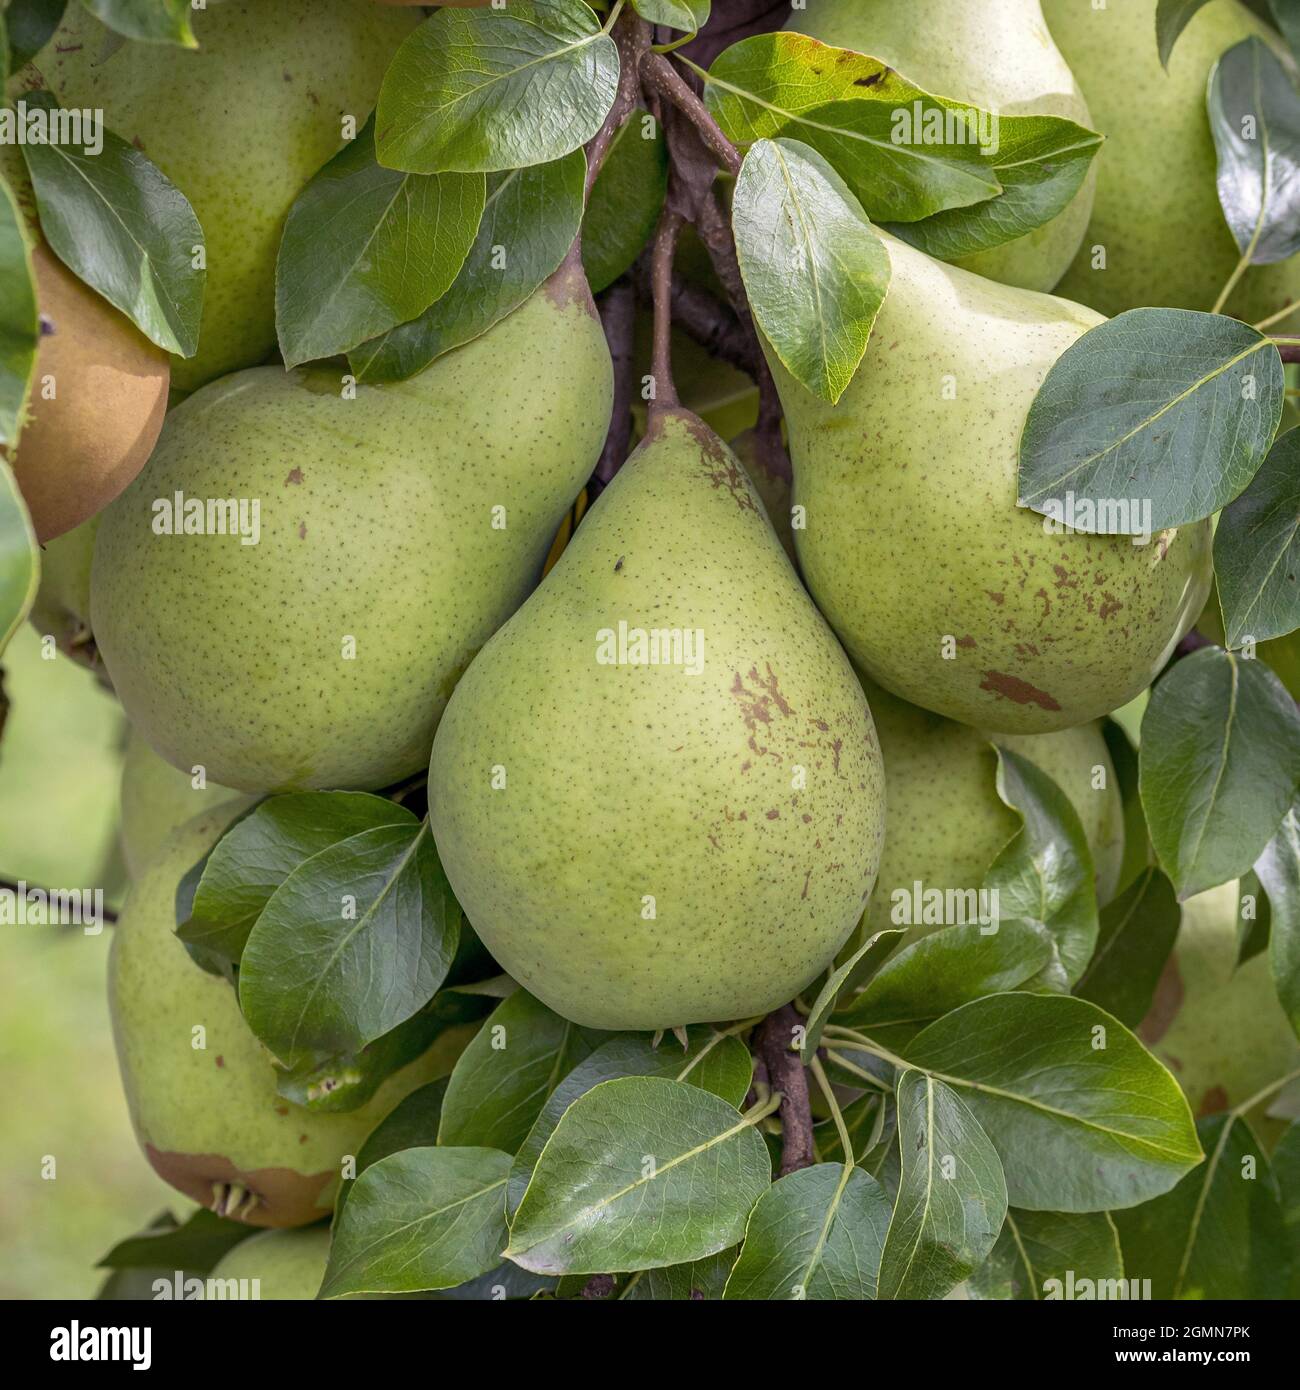 Common pear (Pyrus communis 'Six' Butterbirne', Pyrus communis Six' Butterbirne), pear on a tree, cultivar Six' Butterbirne Stock Photo